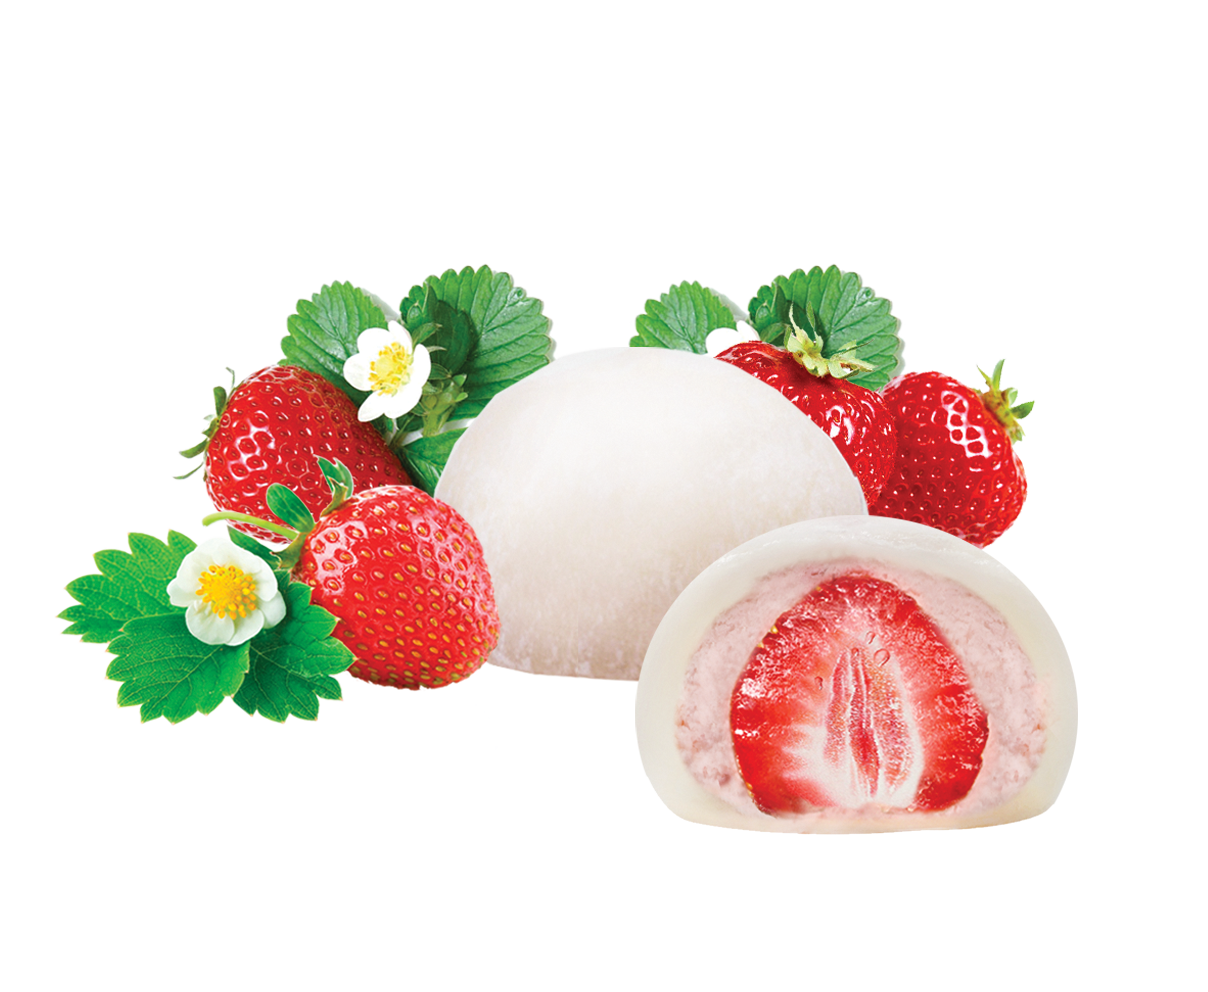 Whole Strawberry mochi